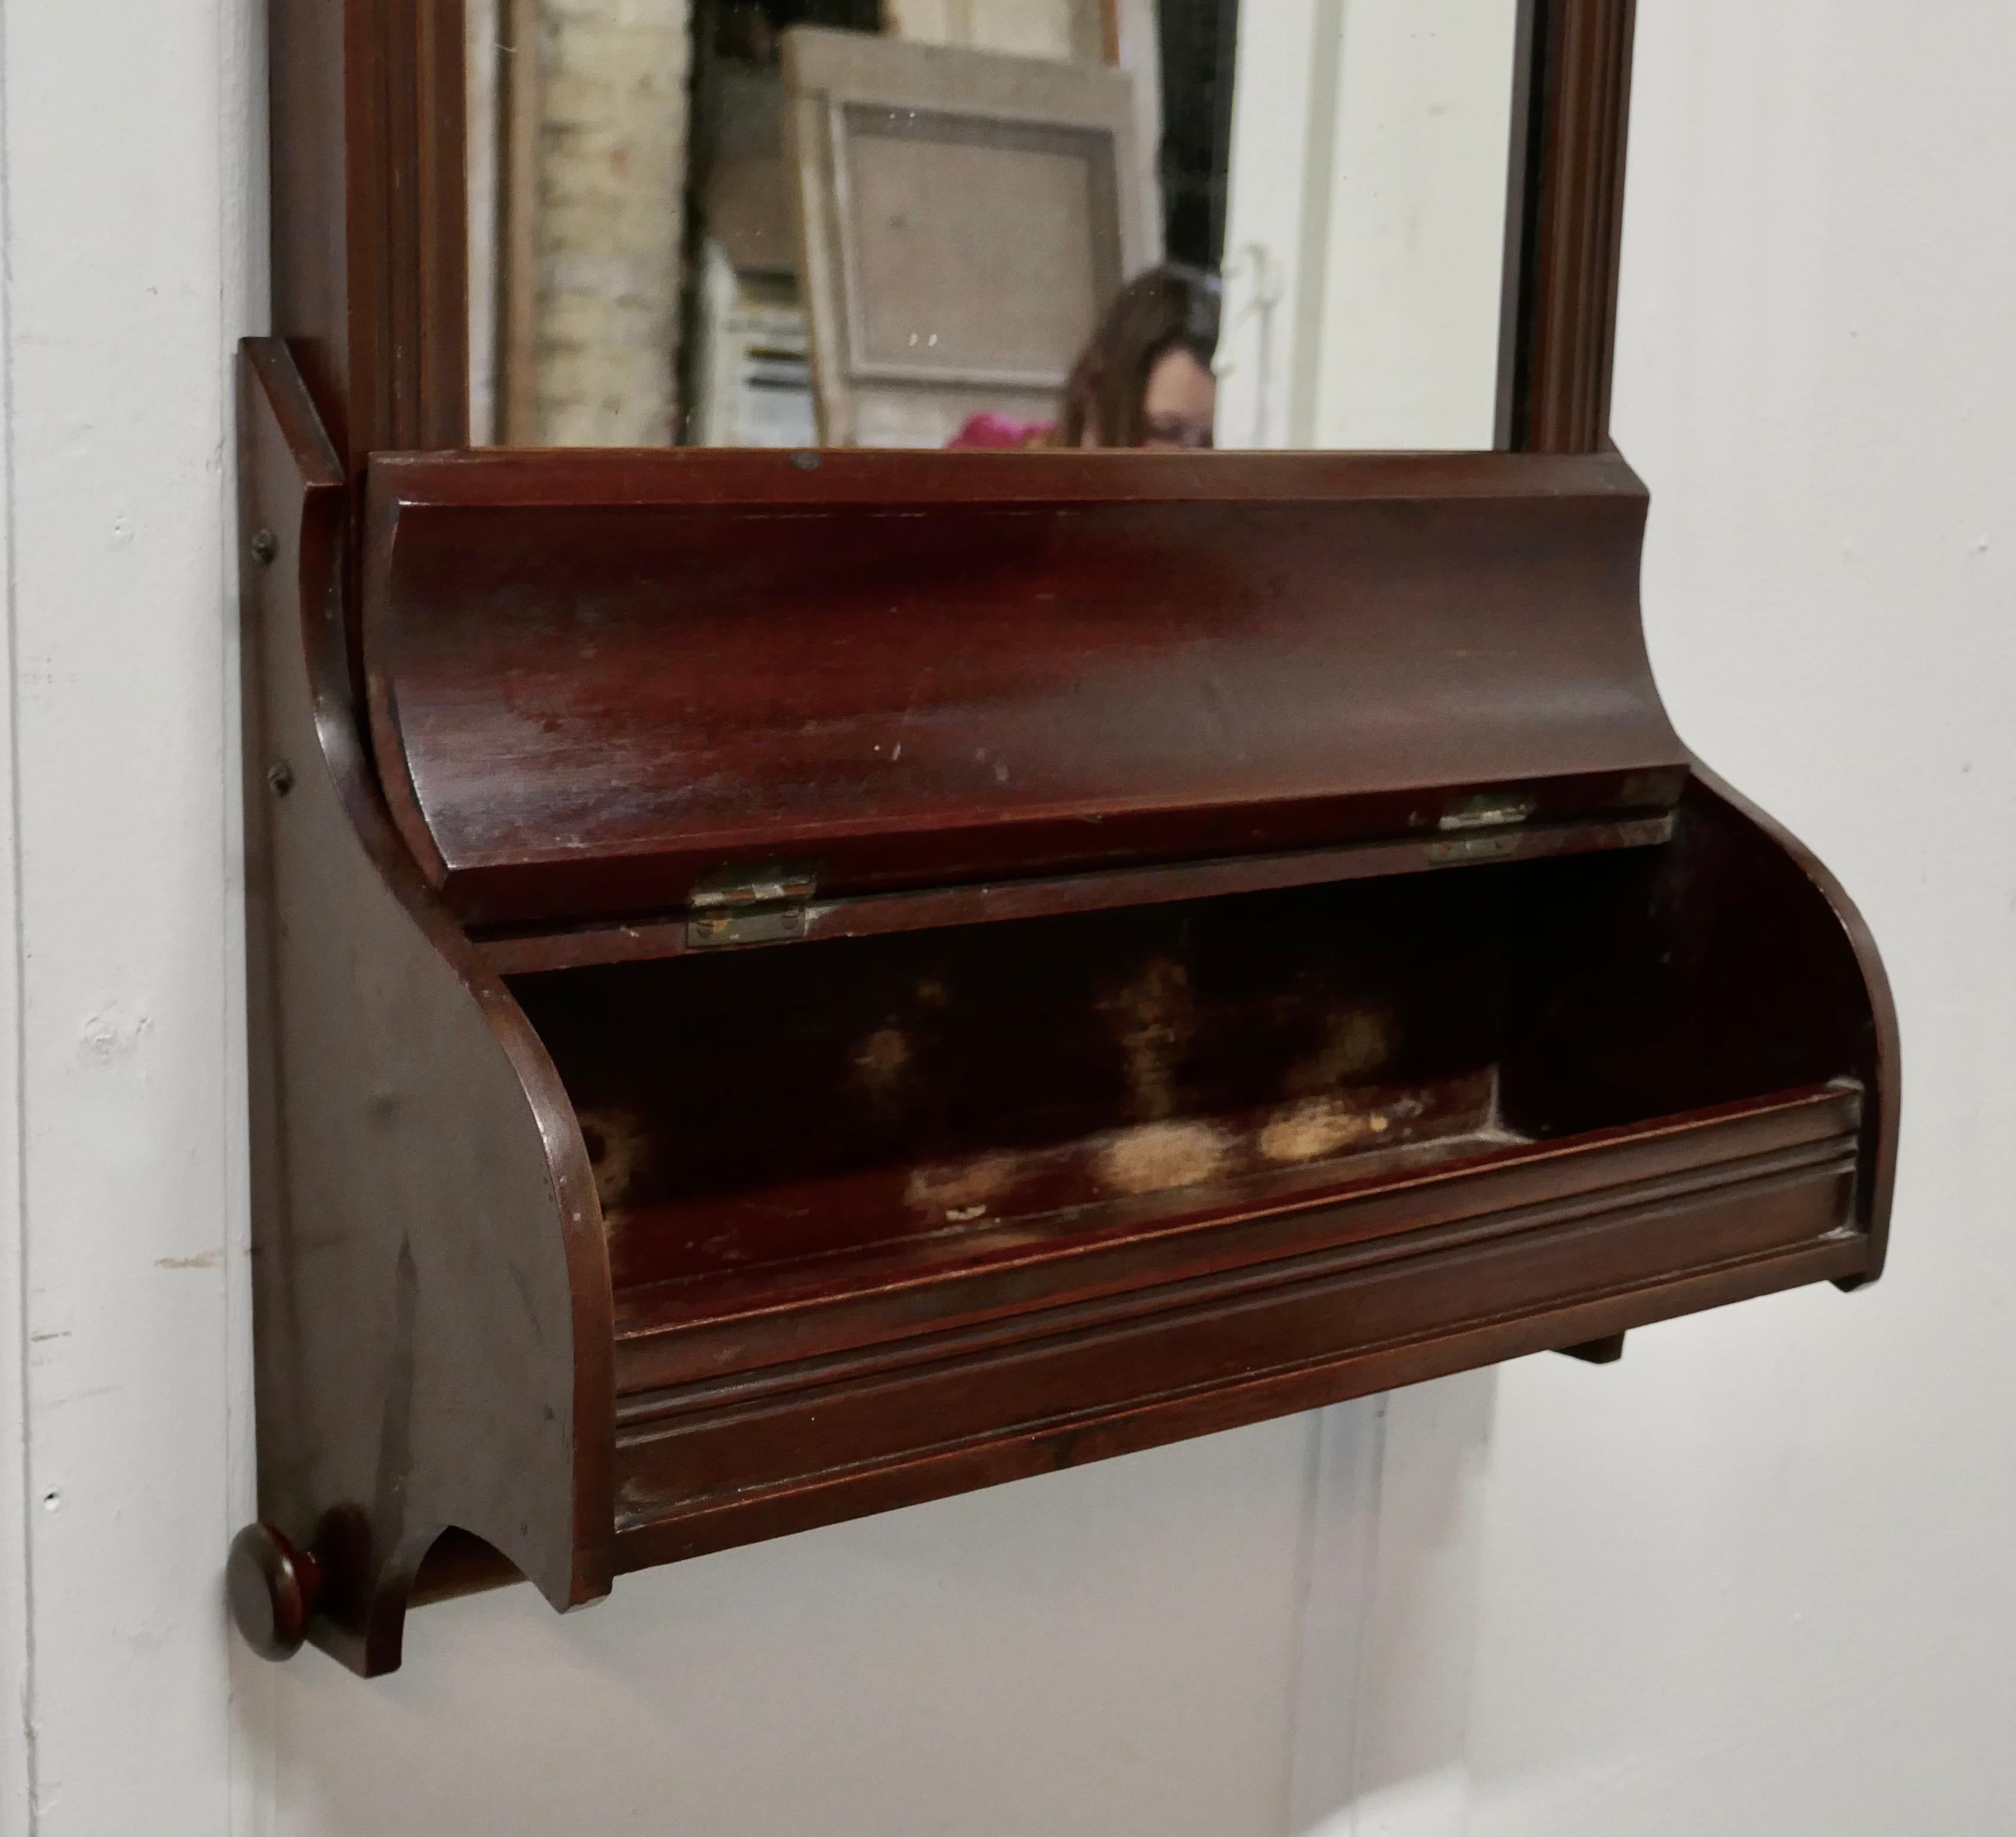 19th Century Victorian Mahogany Bathroom Wall Mirror with Towel Rail